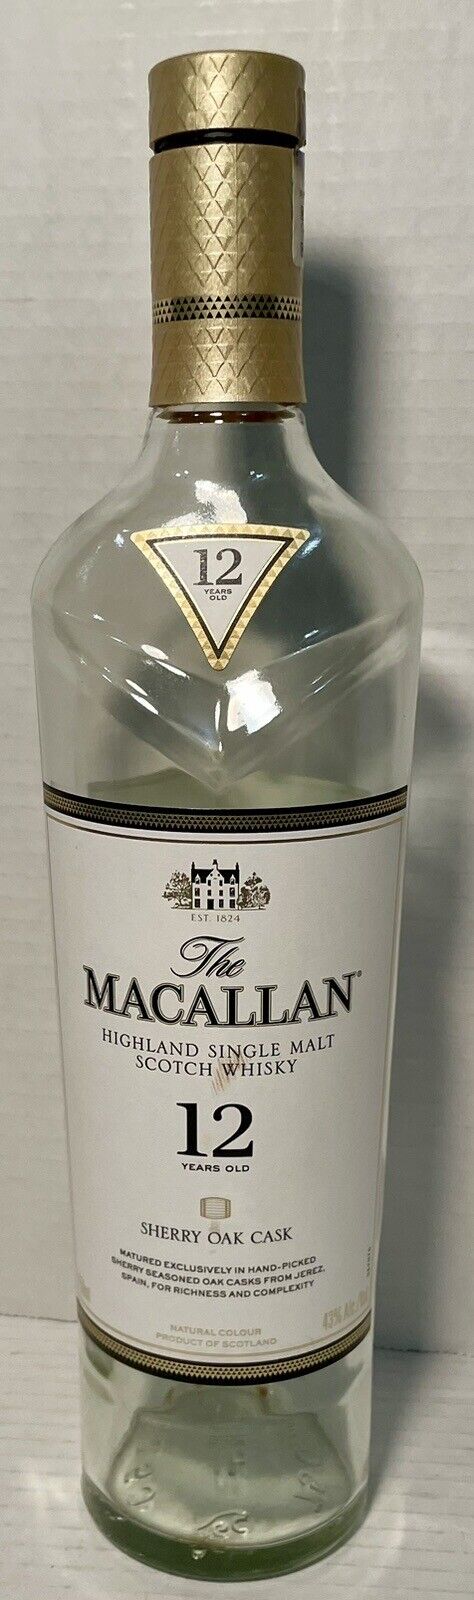 MACALLAN 12 Year Old Highland Single Malt Scotch Whisky EMPTY BOTTLE ONLY 750 Ml